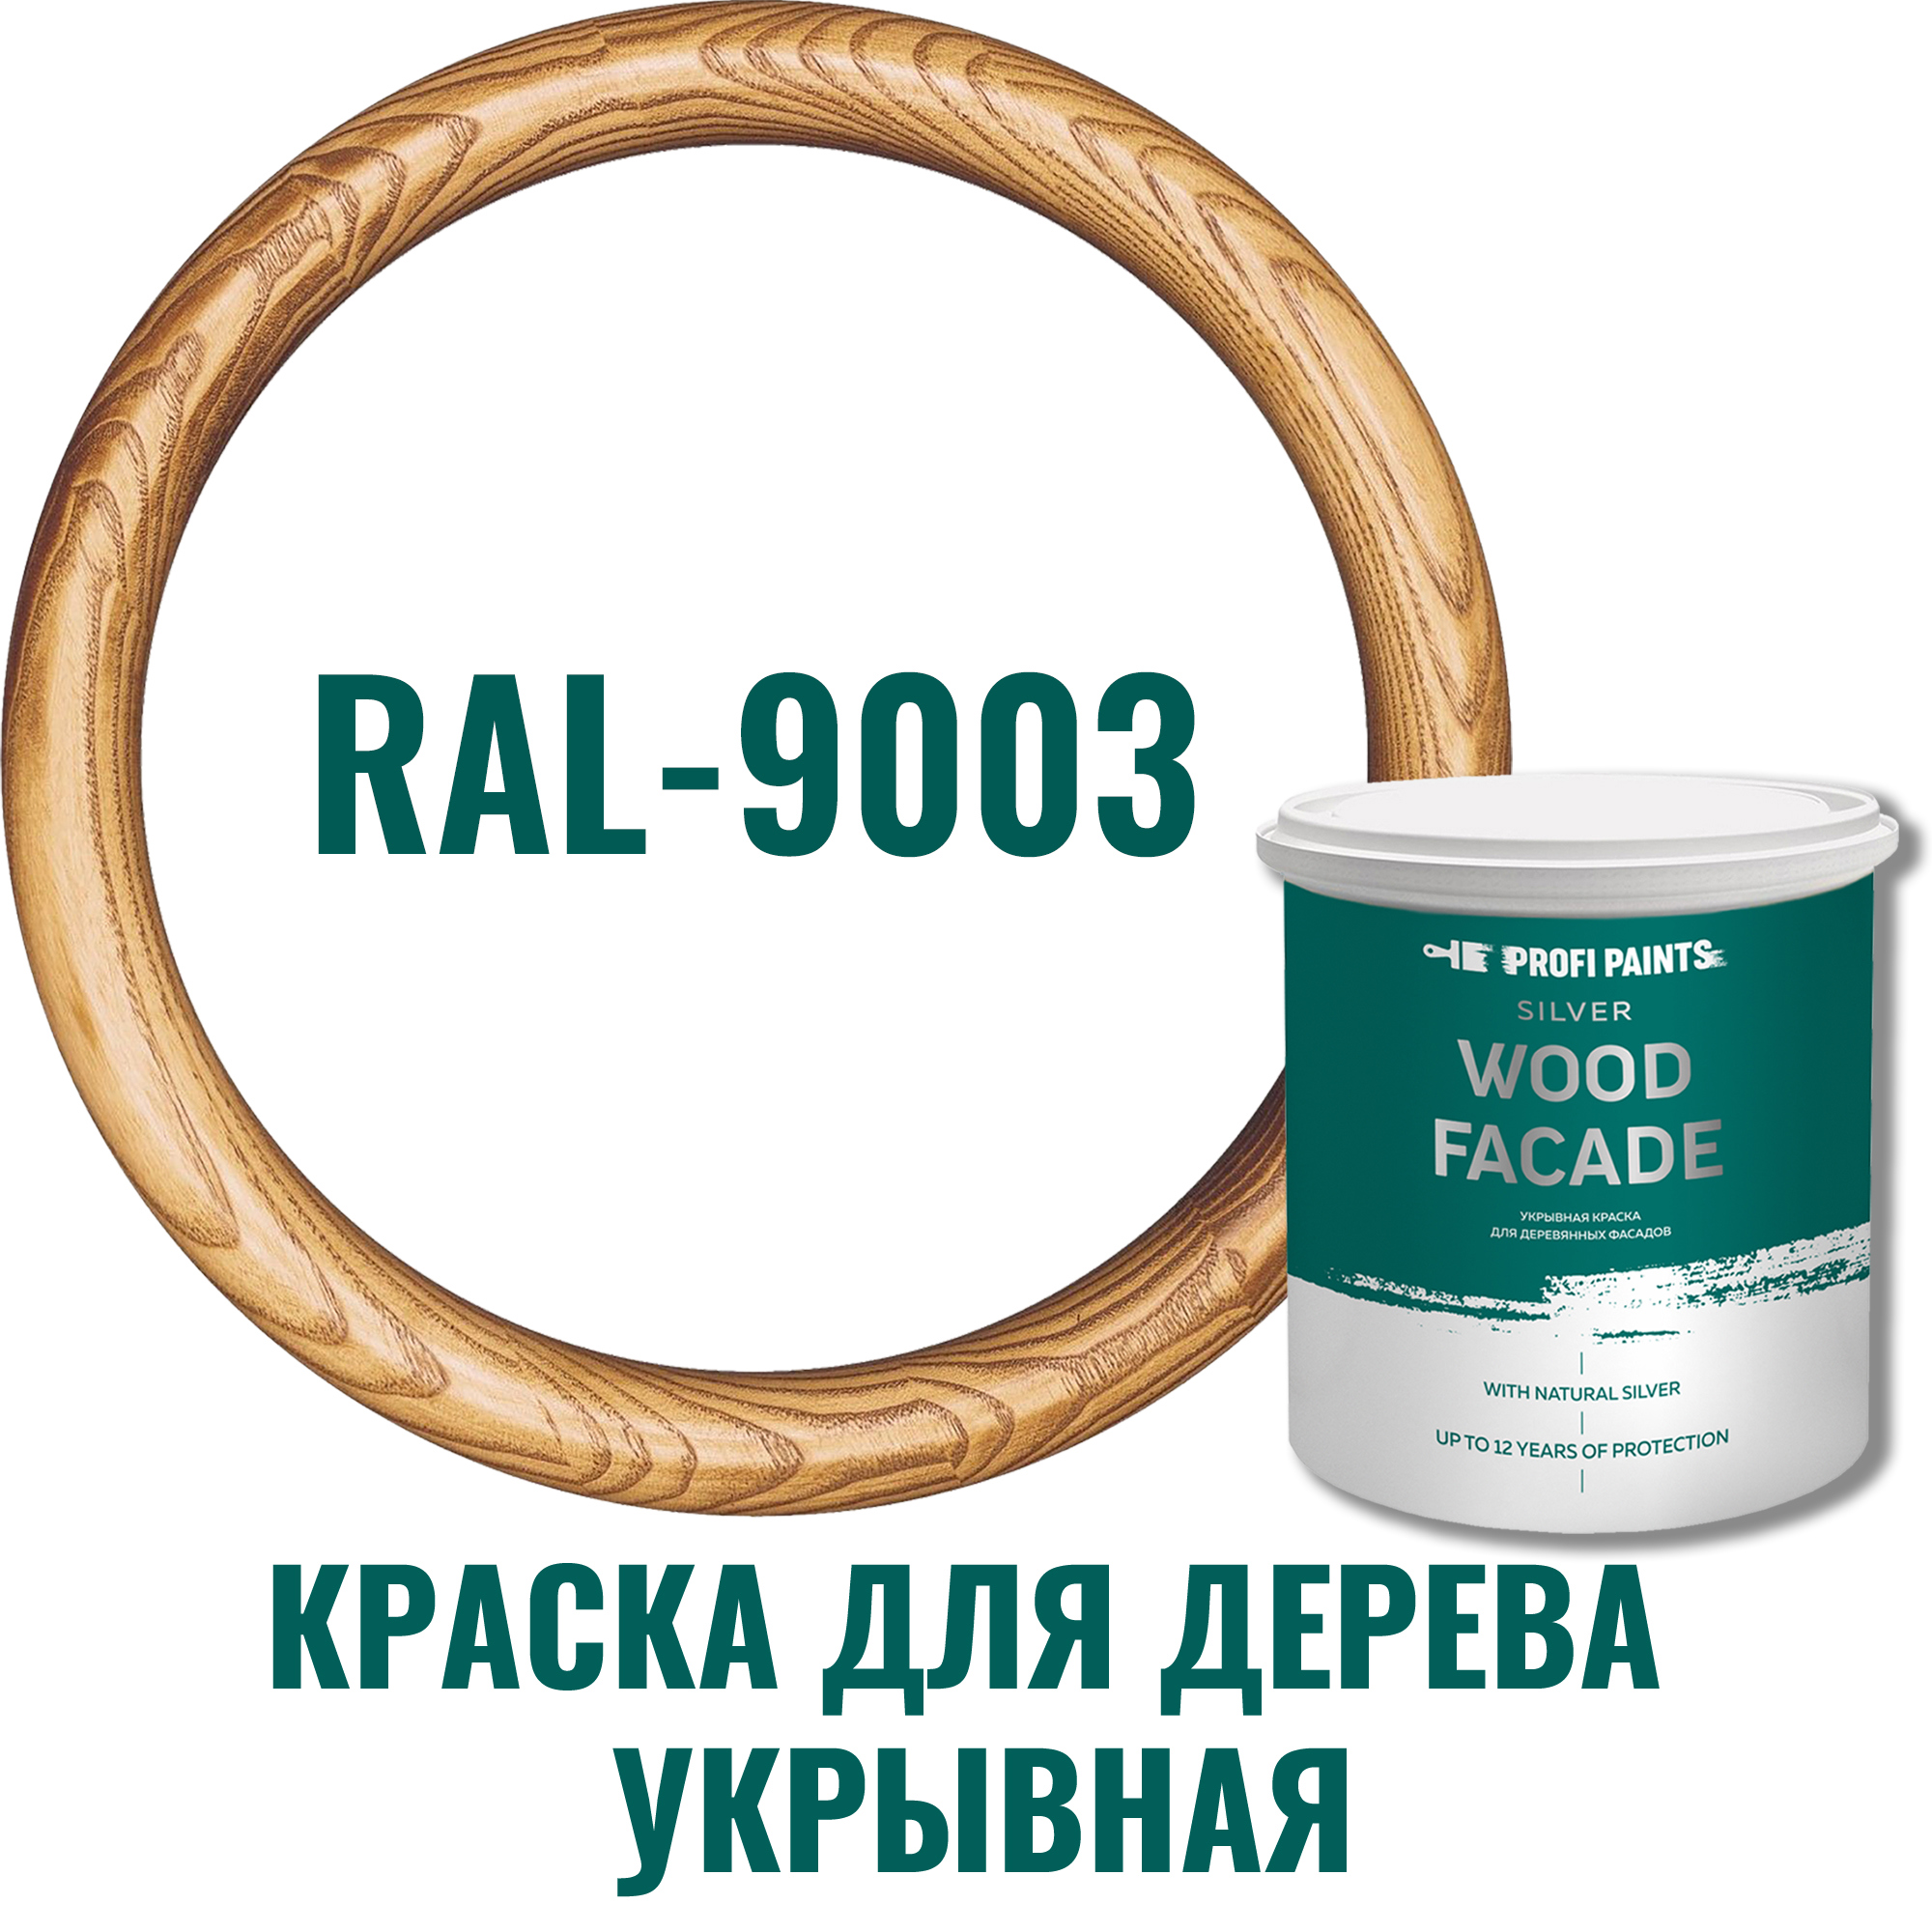 91106623 Краска для дерева 11263_D SILVER WOOD FASADE цвет RAL-9003 белый 9 л STLM-0487616 PROFIPAINTS